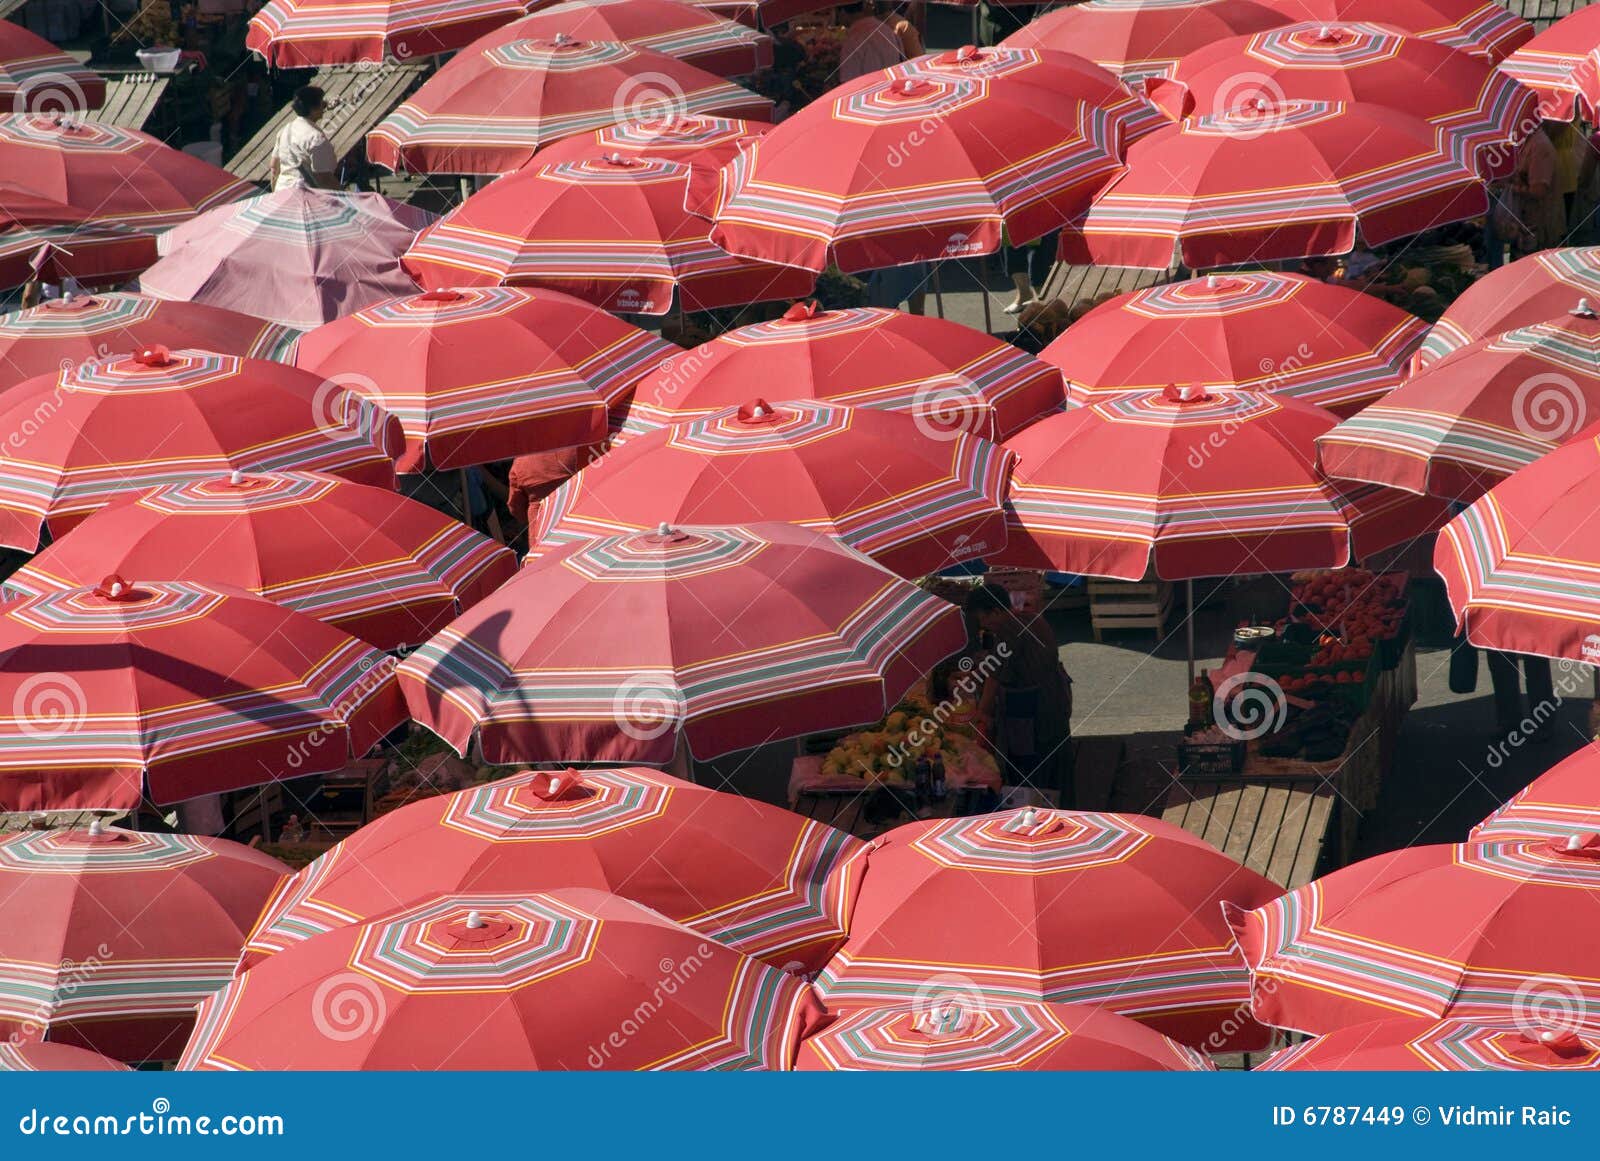 traditional parasols on the zagreb - croatia marke